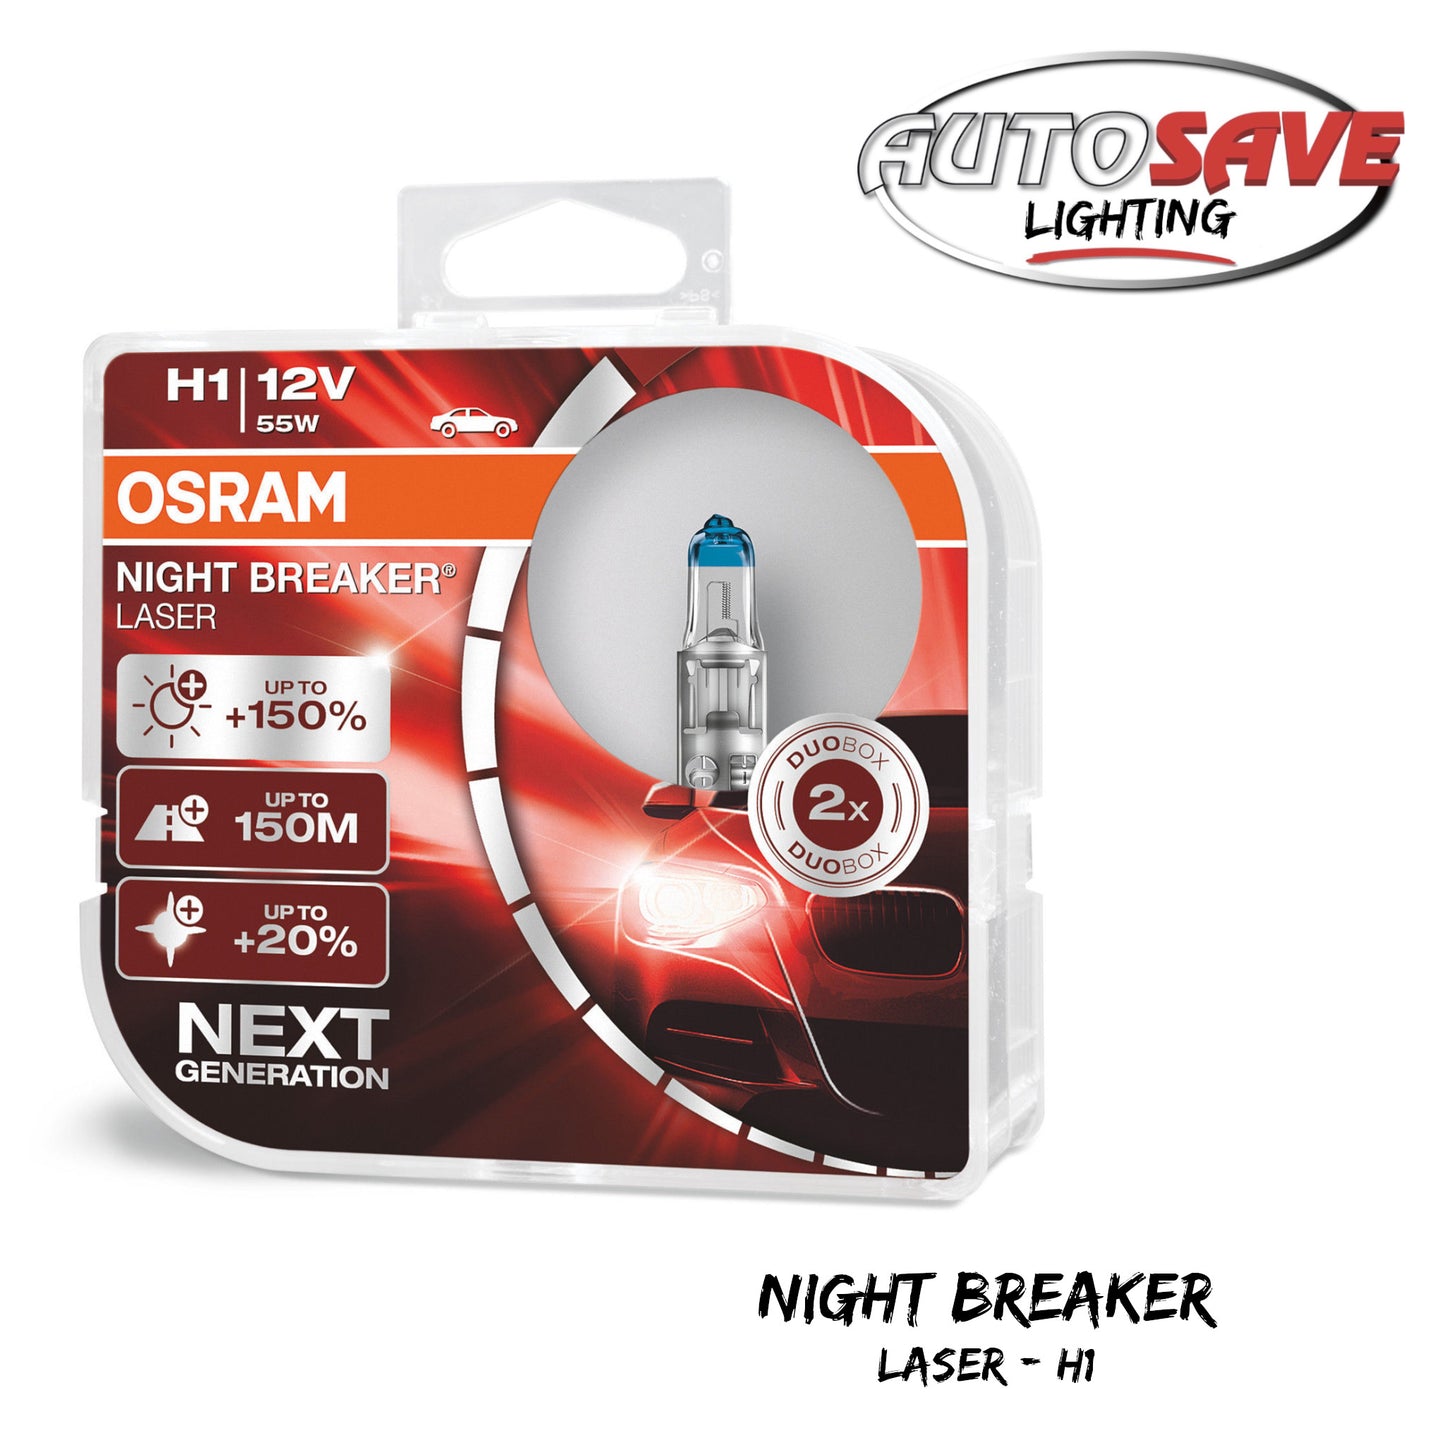 NIGHT BREAKER LASER H1 – Autosave Components